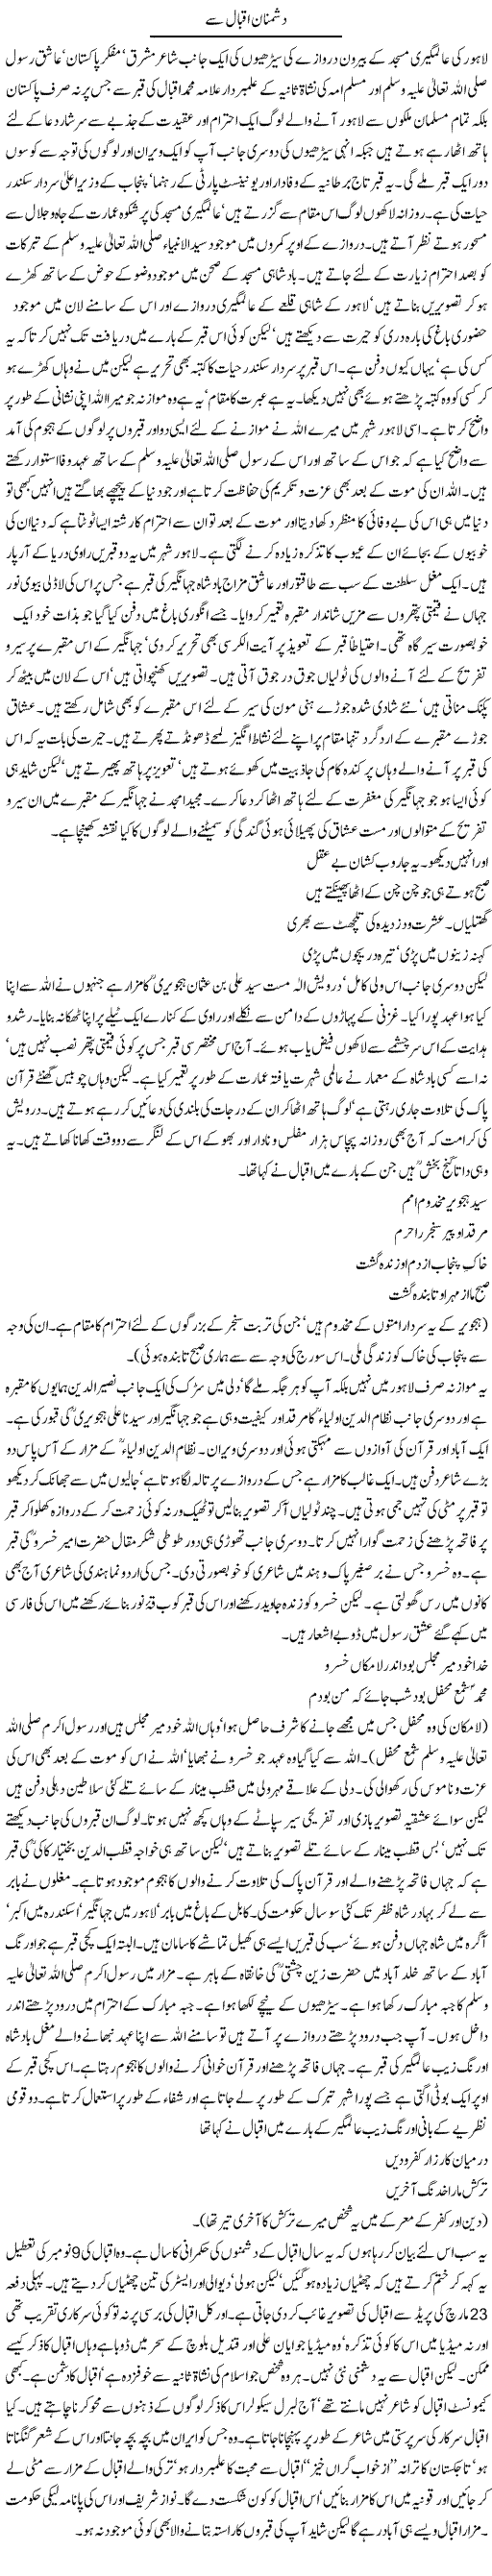 Dushmanan Iqbal Se | Orya Maqbool Jan | Daily Urdu Columns